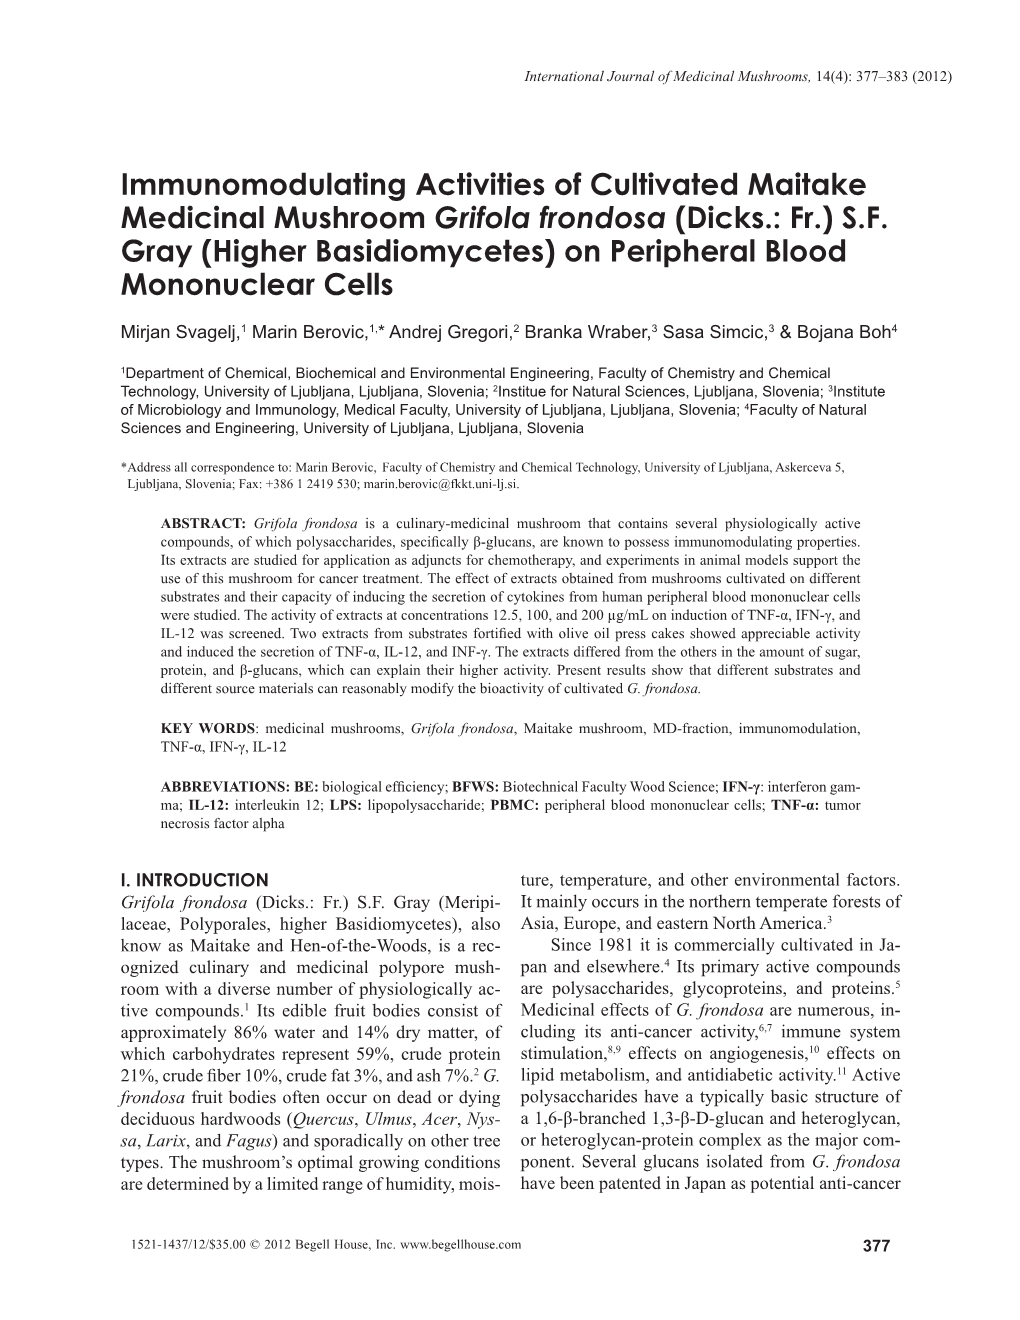 Immunomodulating Activities of Cultivated Maitake Medicinal Mushroom Grifola Frondosa (Dicks.: Fr.) S.F